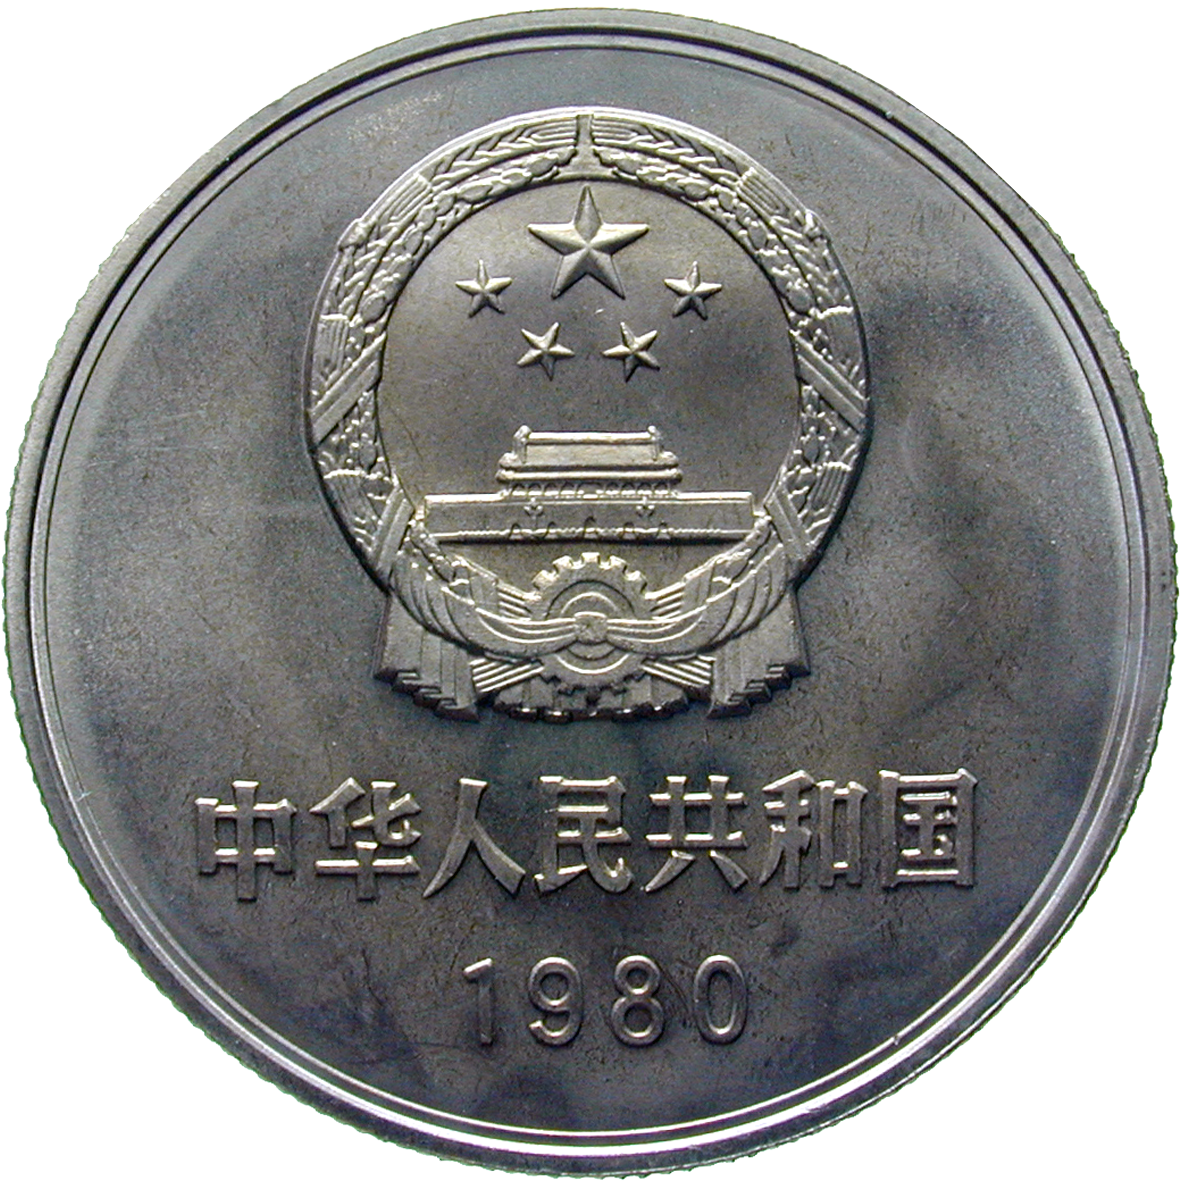 Peoples Republic of China, 1 Yuan 1980 (obverse)